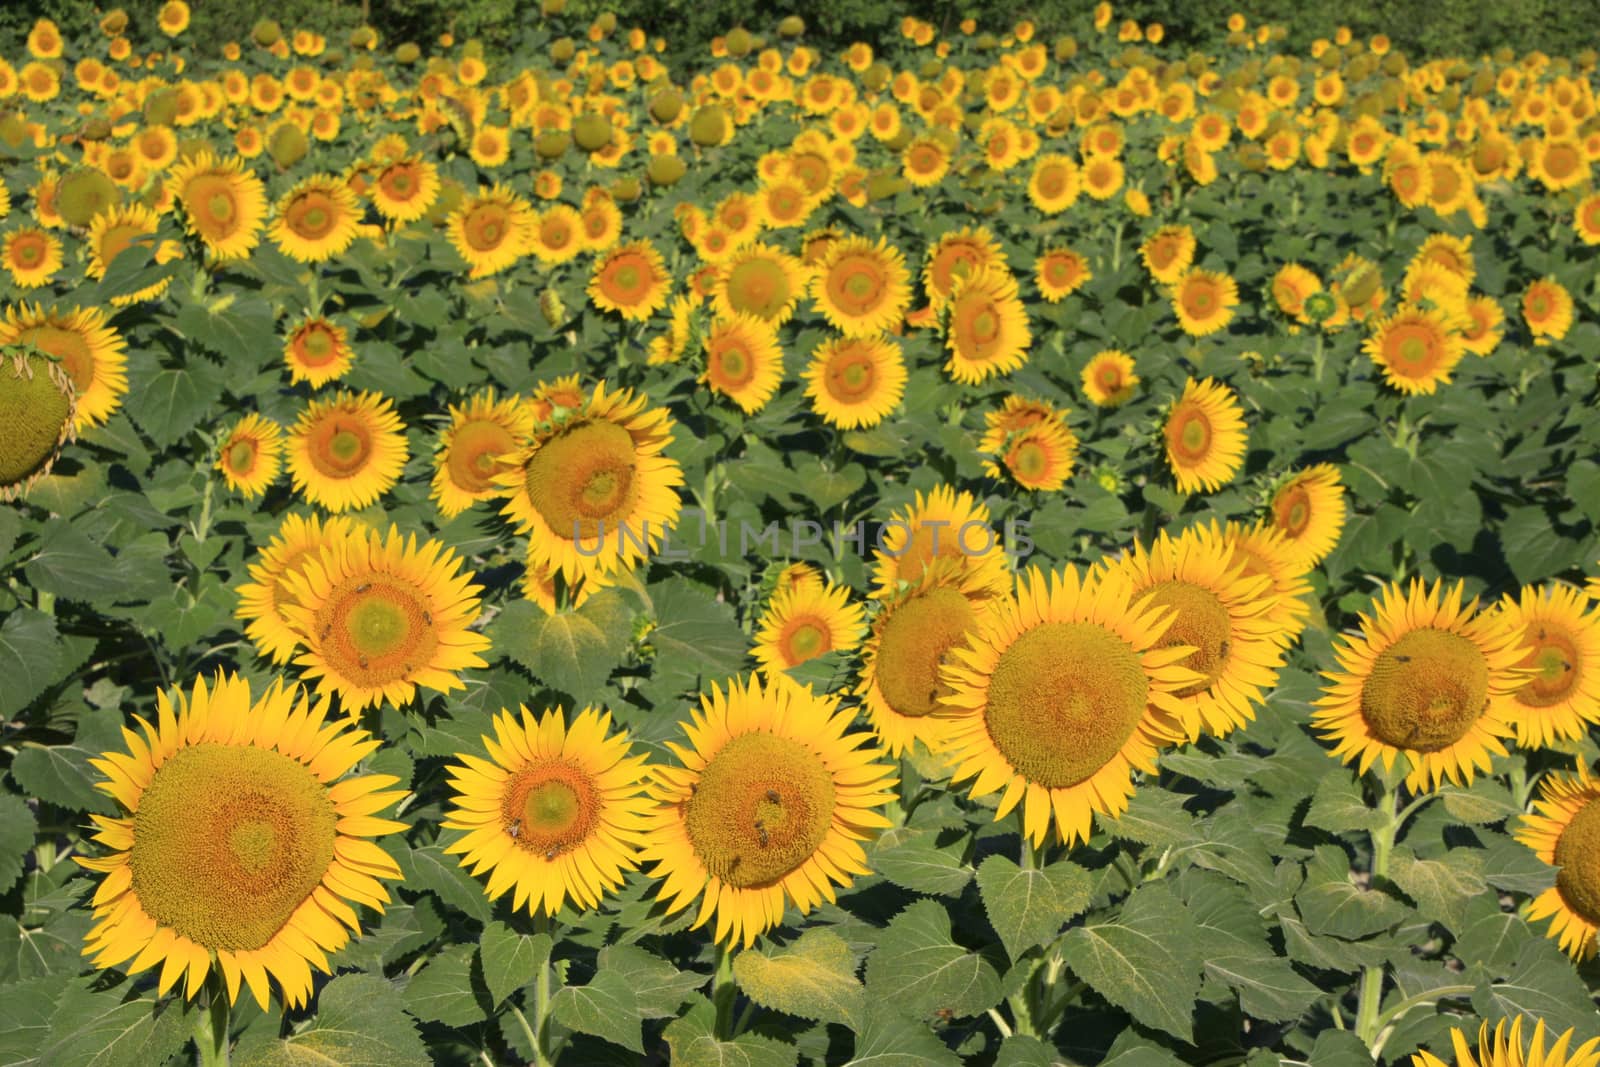 Field of sunflowers by donya_nedomam